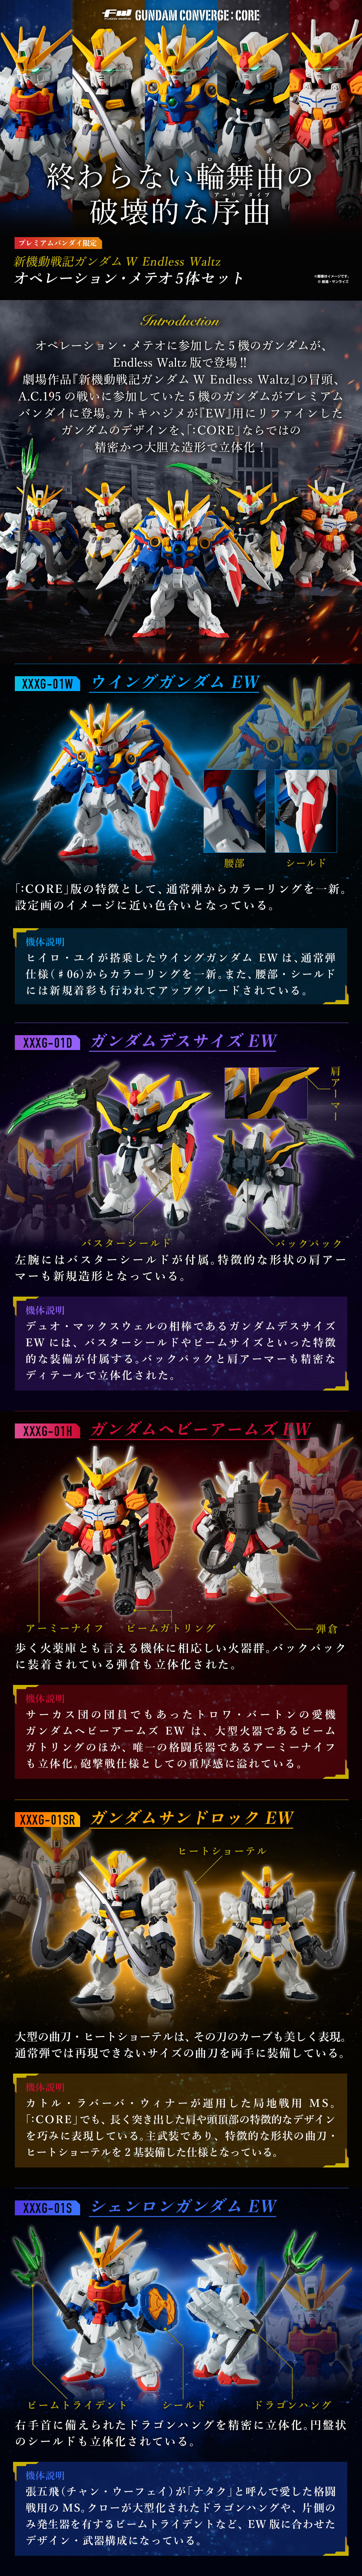 Fw Gundam Converge Core 新機動戦記ガンダムw Endless Waltz オペレーション メテオ 5体セット プレミアムバンダイ限定 本日13時より予約開始